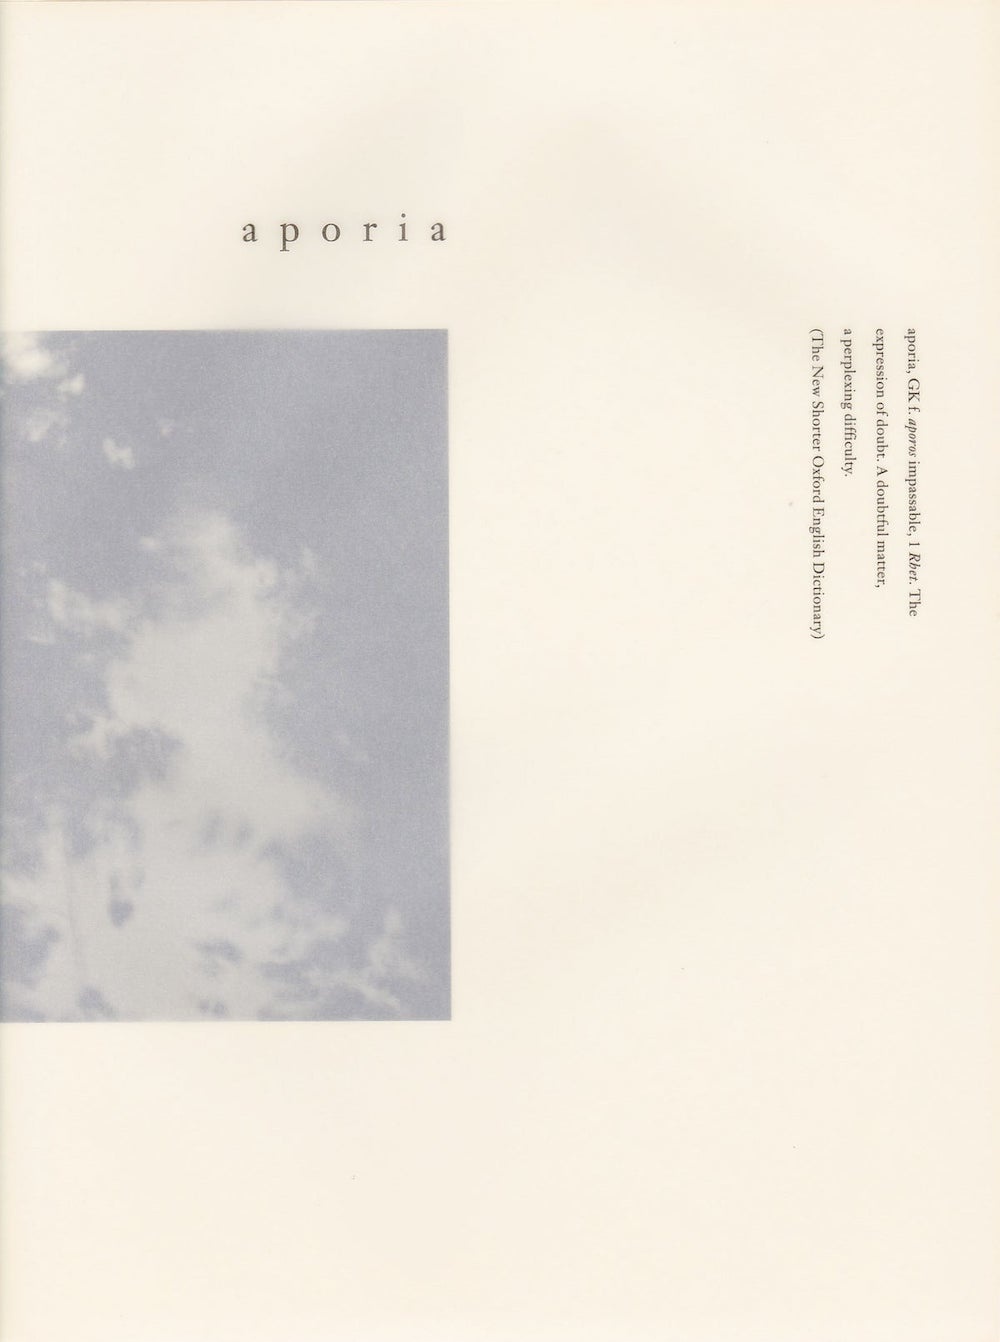 aporia, a book of landscapes